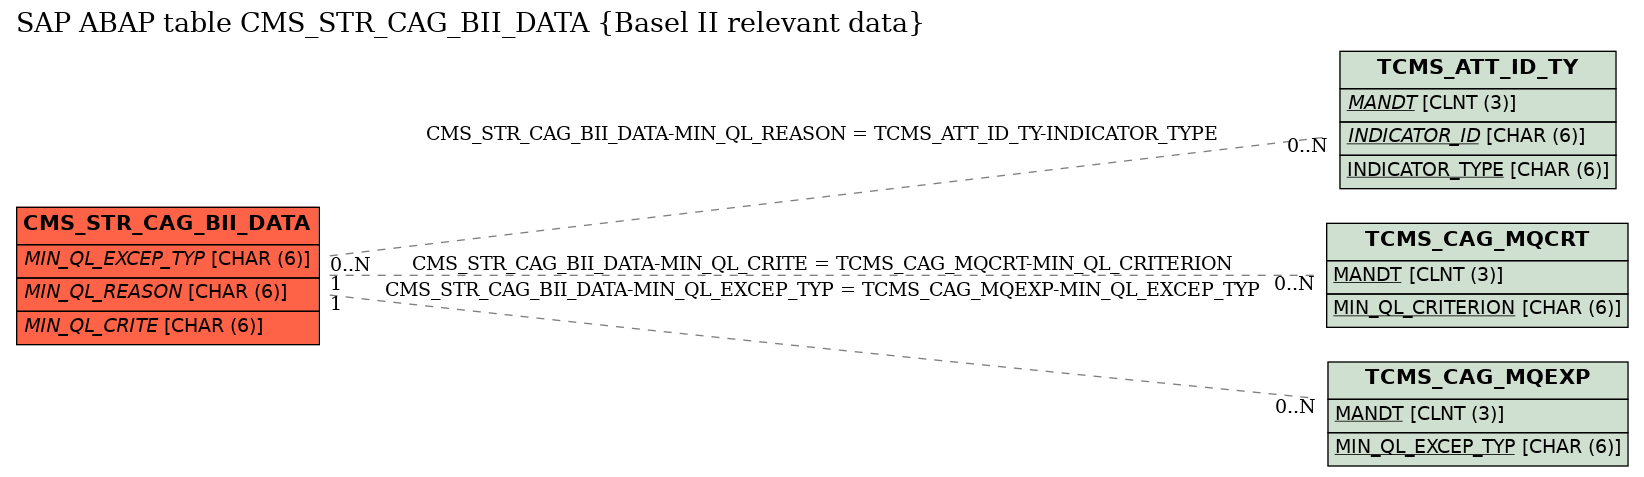 E-R Diagram for table CMS_STR_CAG_BII_DATA (Basel II relevant data)